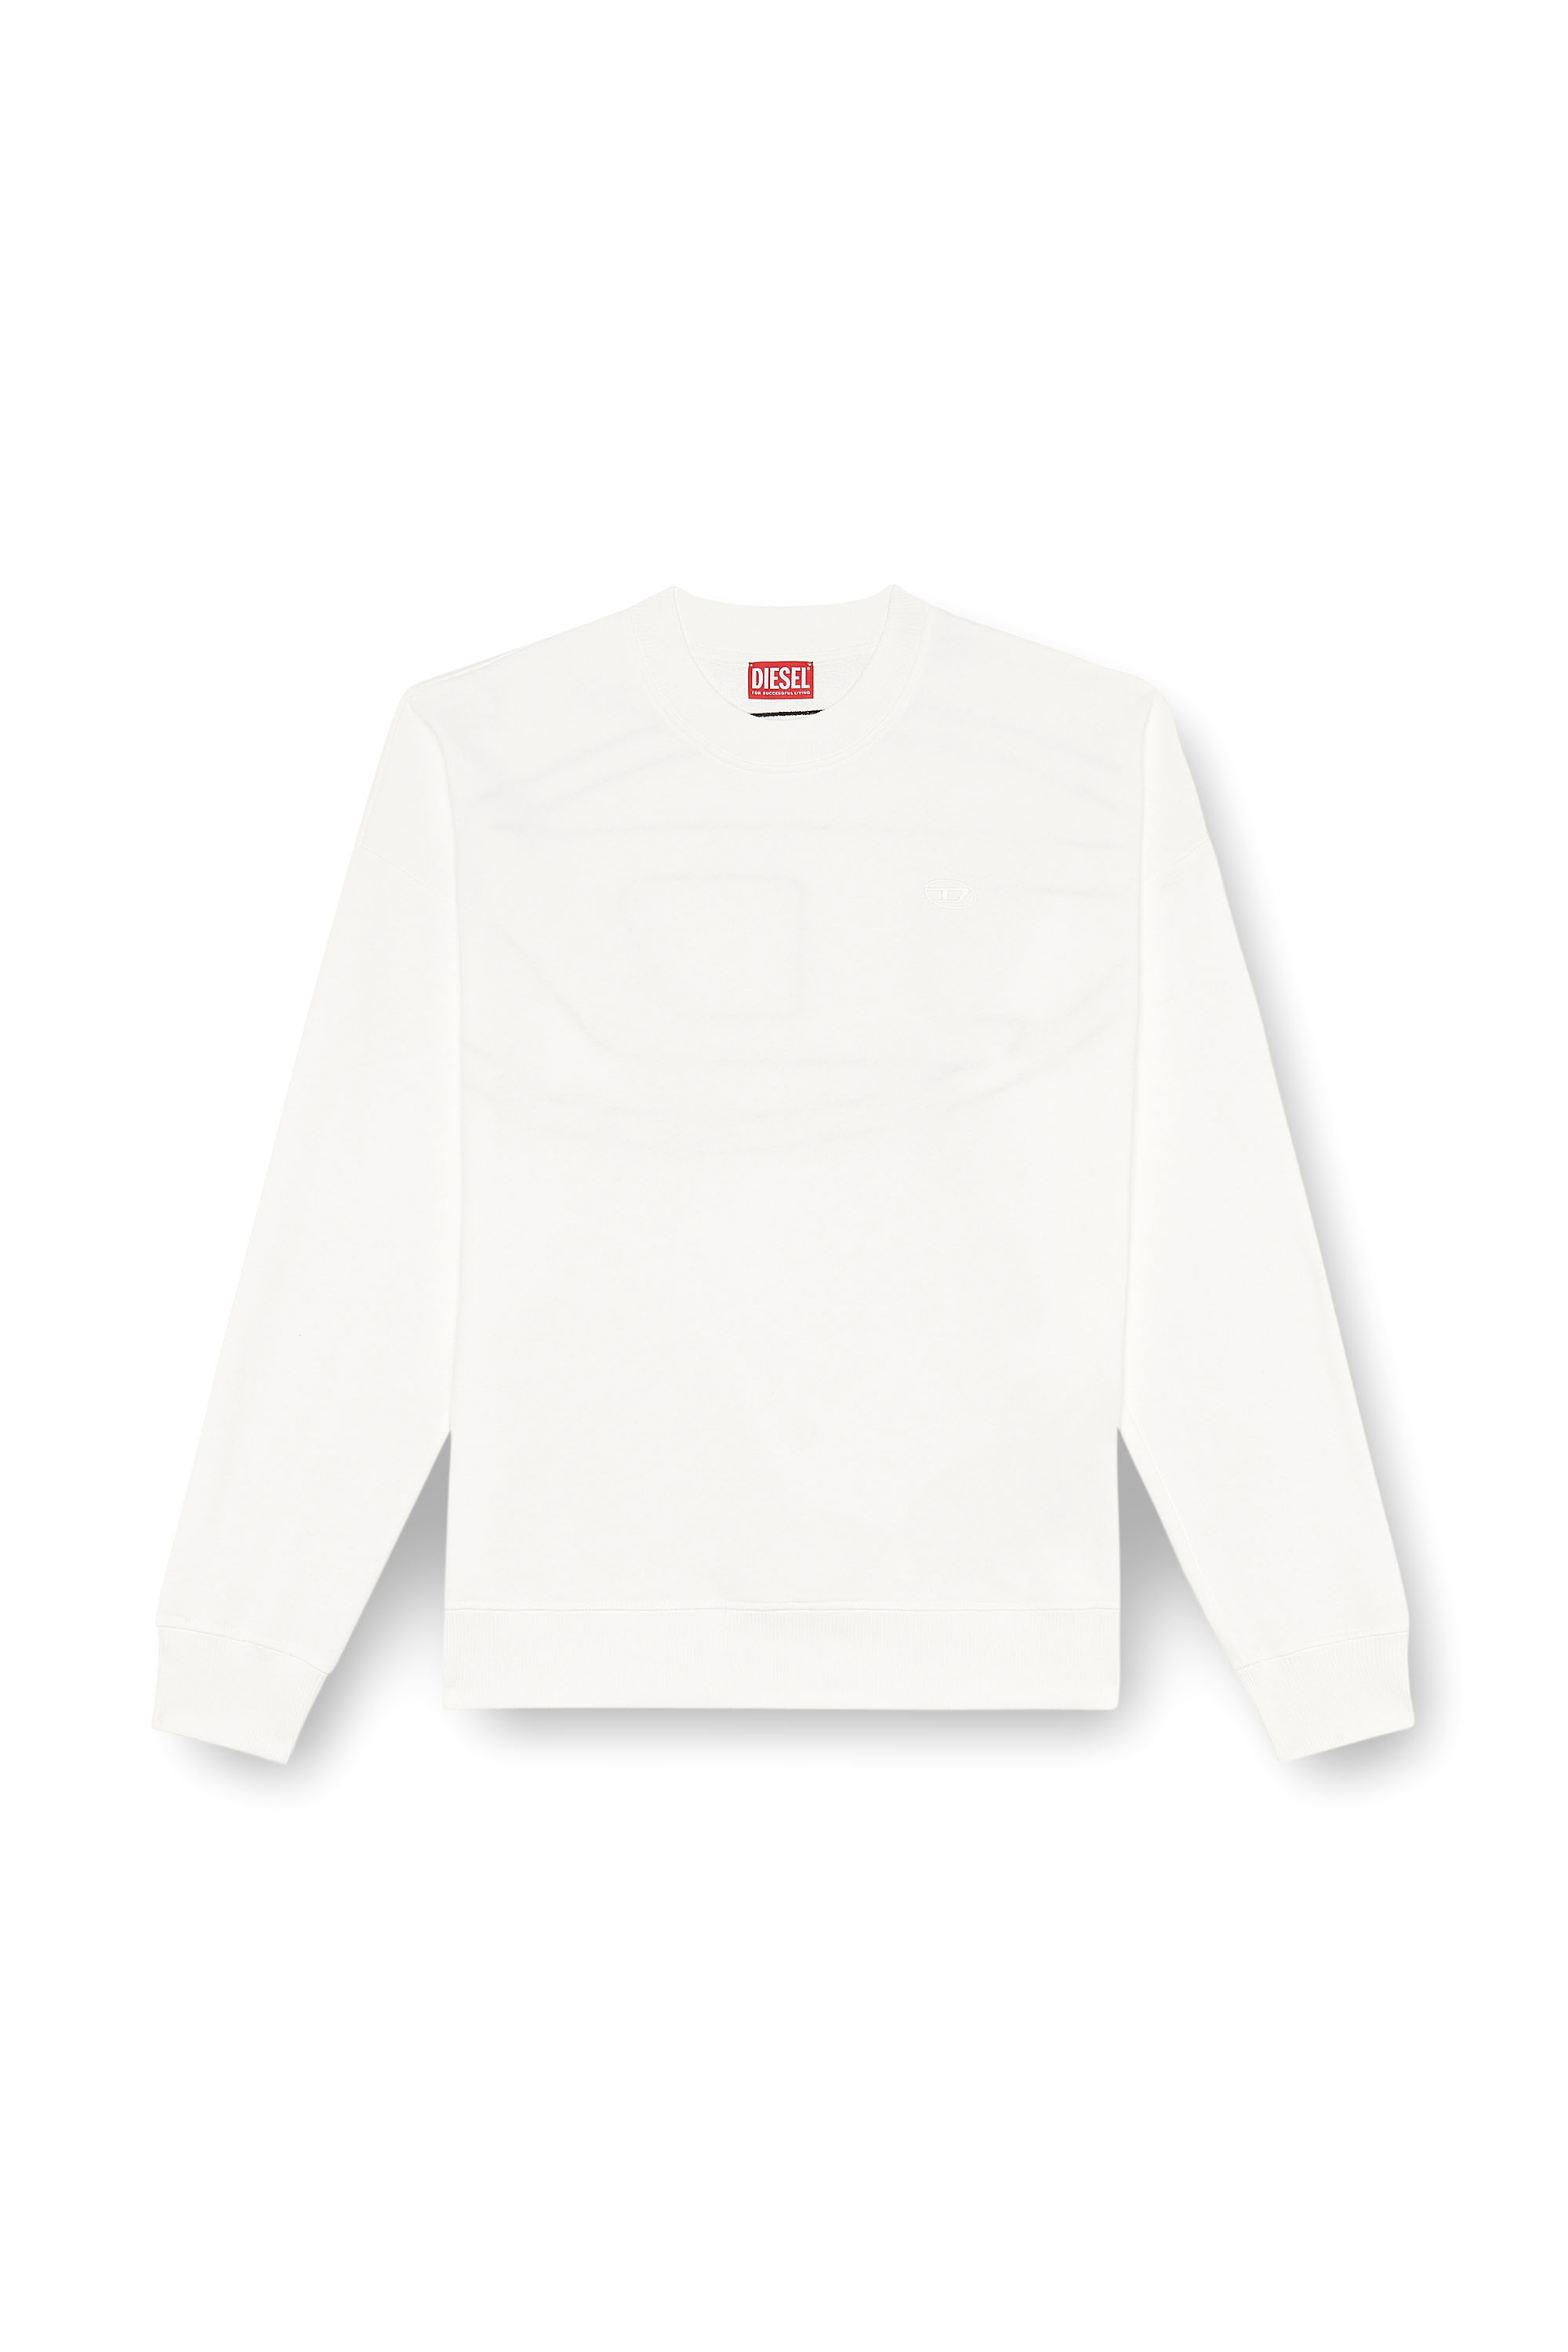 Diesel - S-ROB-MEGOVAL-D, Homme Sweat-shirt avec logo brodé in Blanc - Image 4